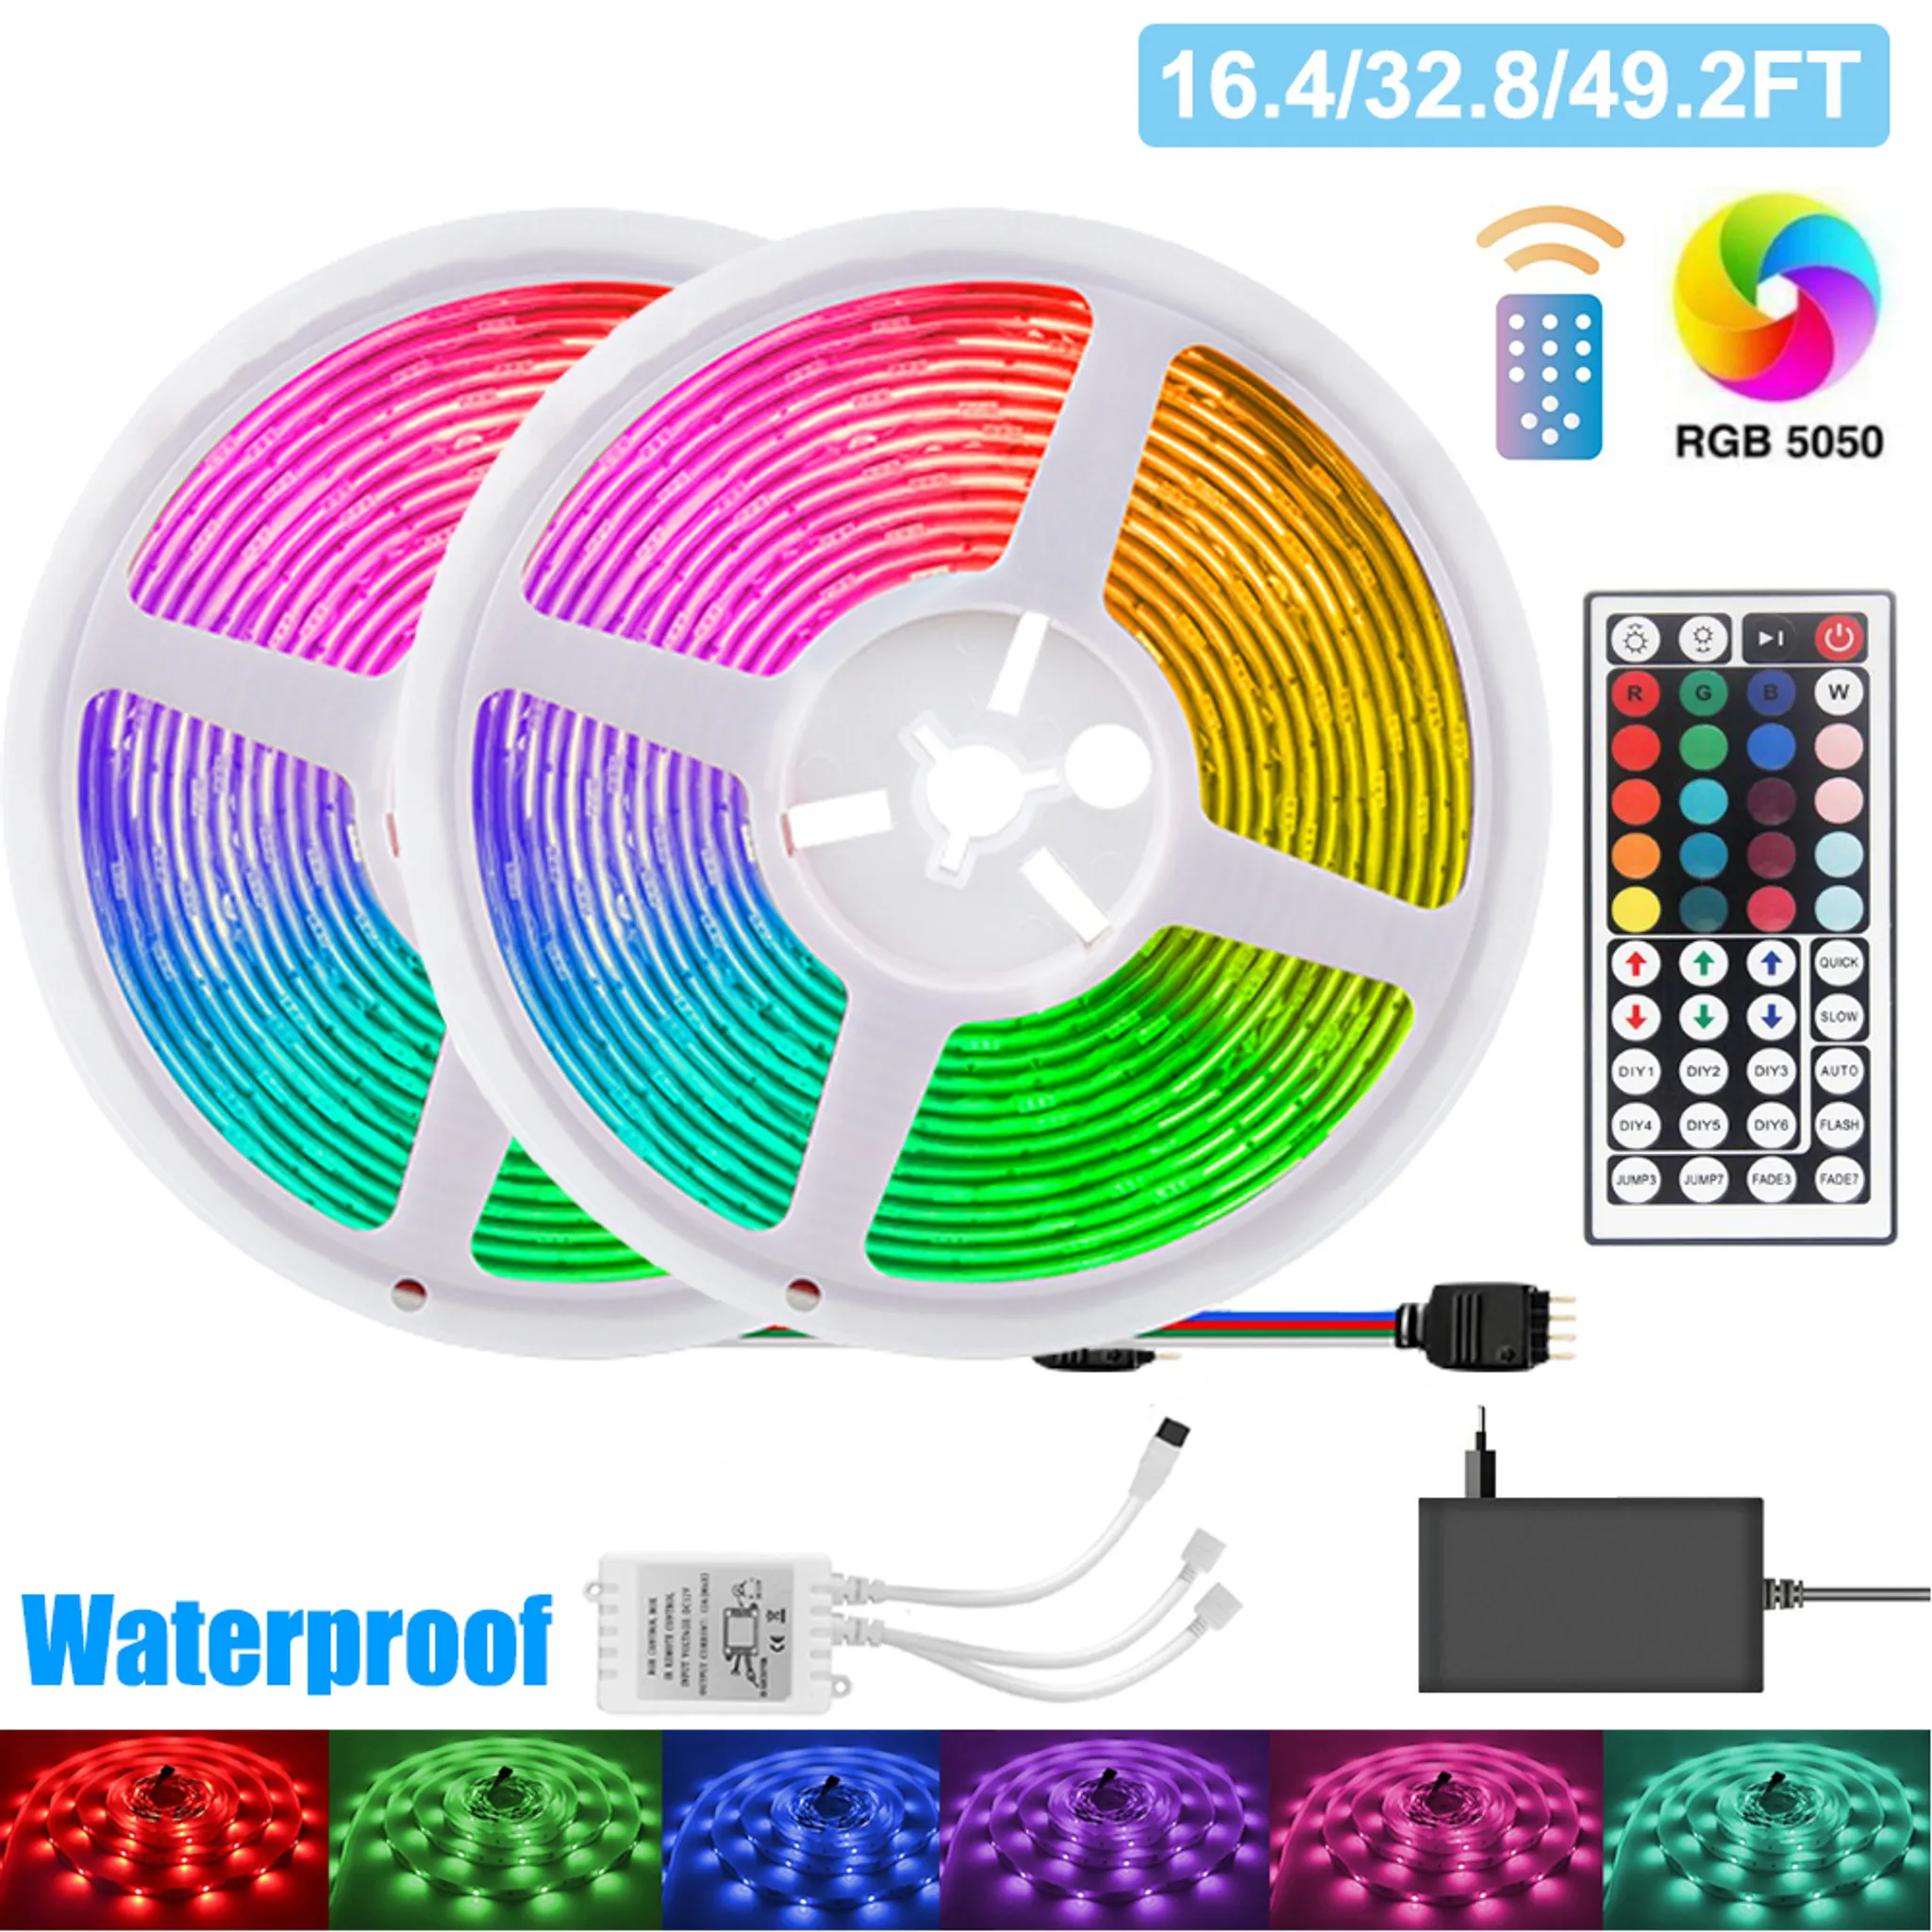 Kaufe 5V 5050 RGB USB LED Streifen Licht Farbwechsel TV PC  Hintergrundbeleuchtung Stimmungsbeleuchtung